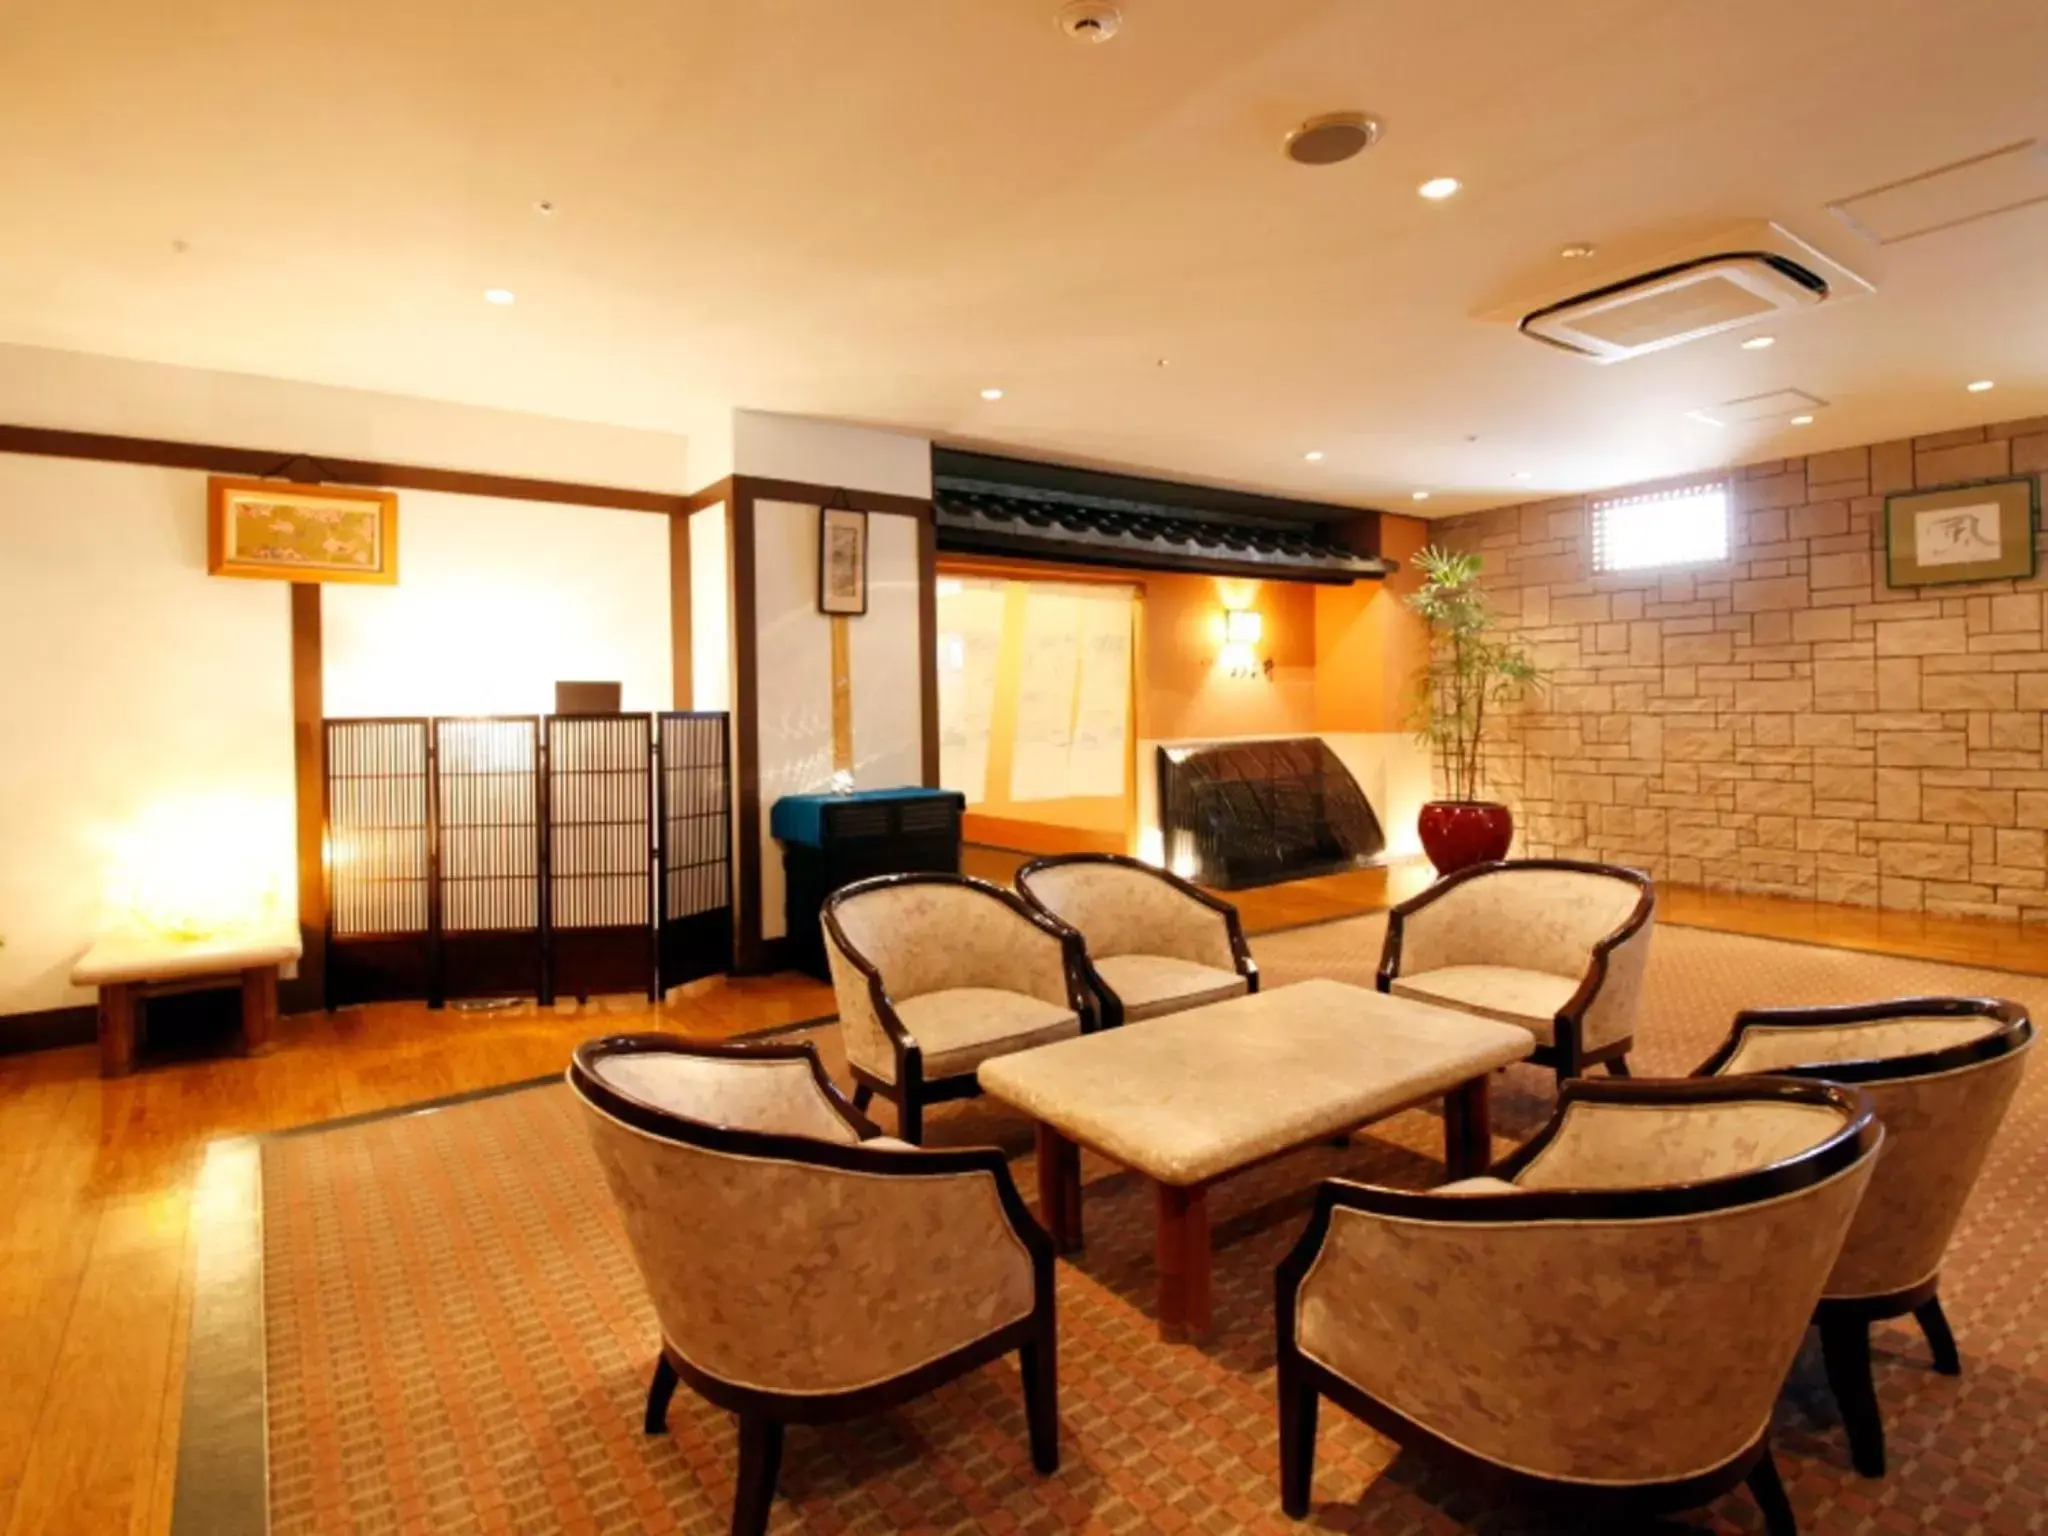 Lobby or reception in Central Hotel Yokosuka